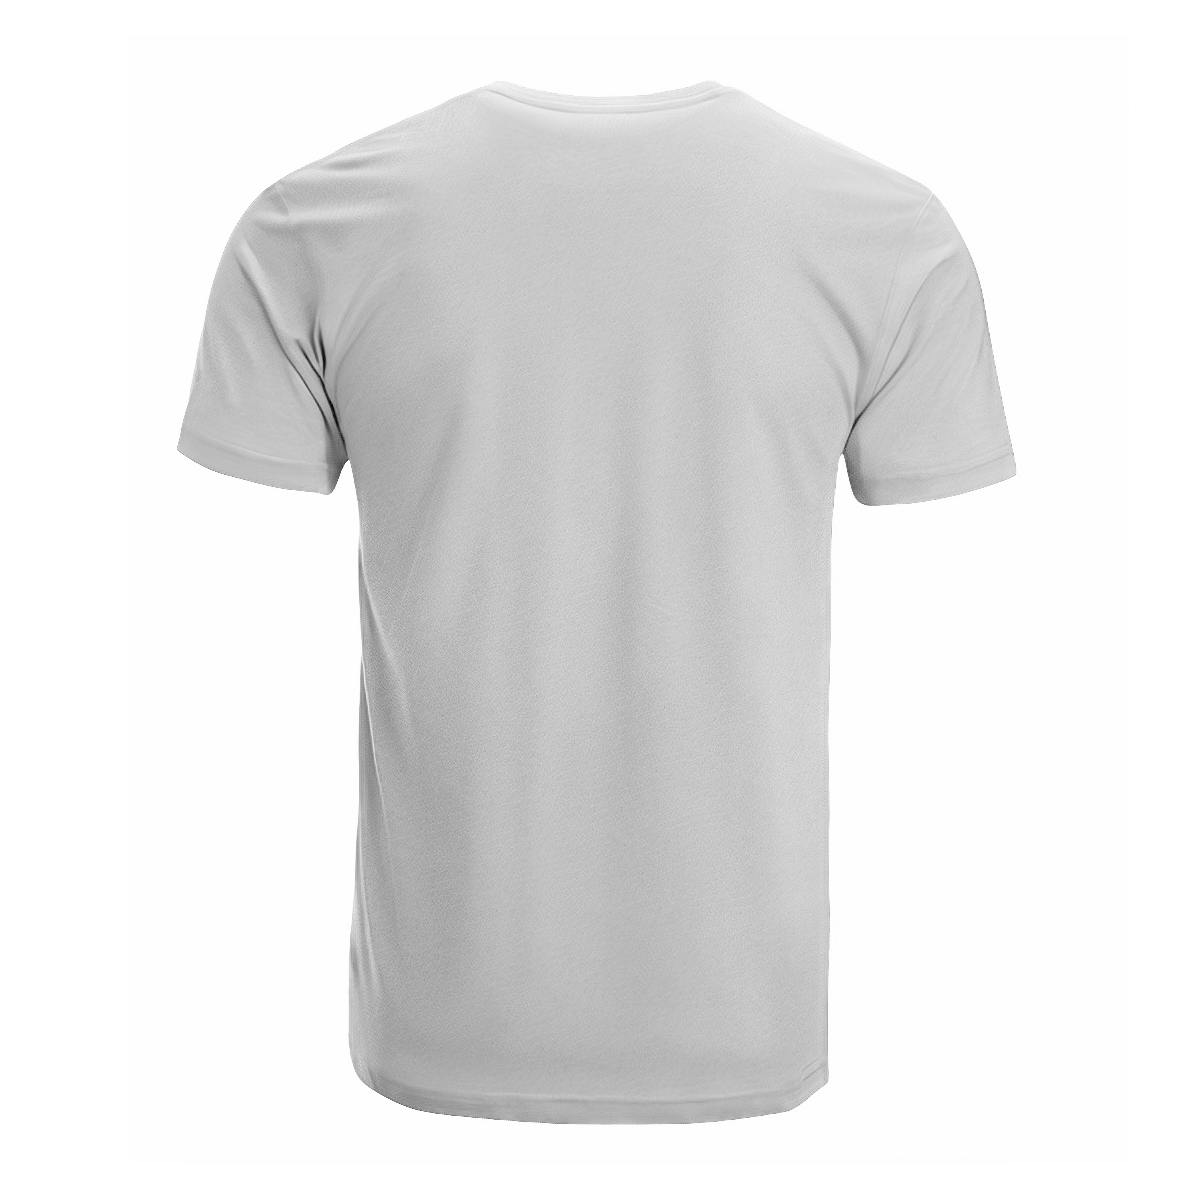 Ralston Tartan Crest T-shirt - I'm not yelling style